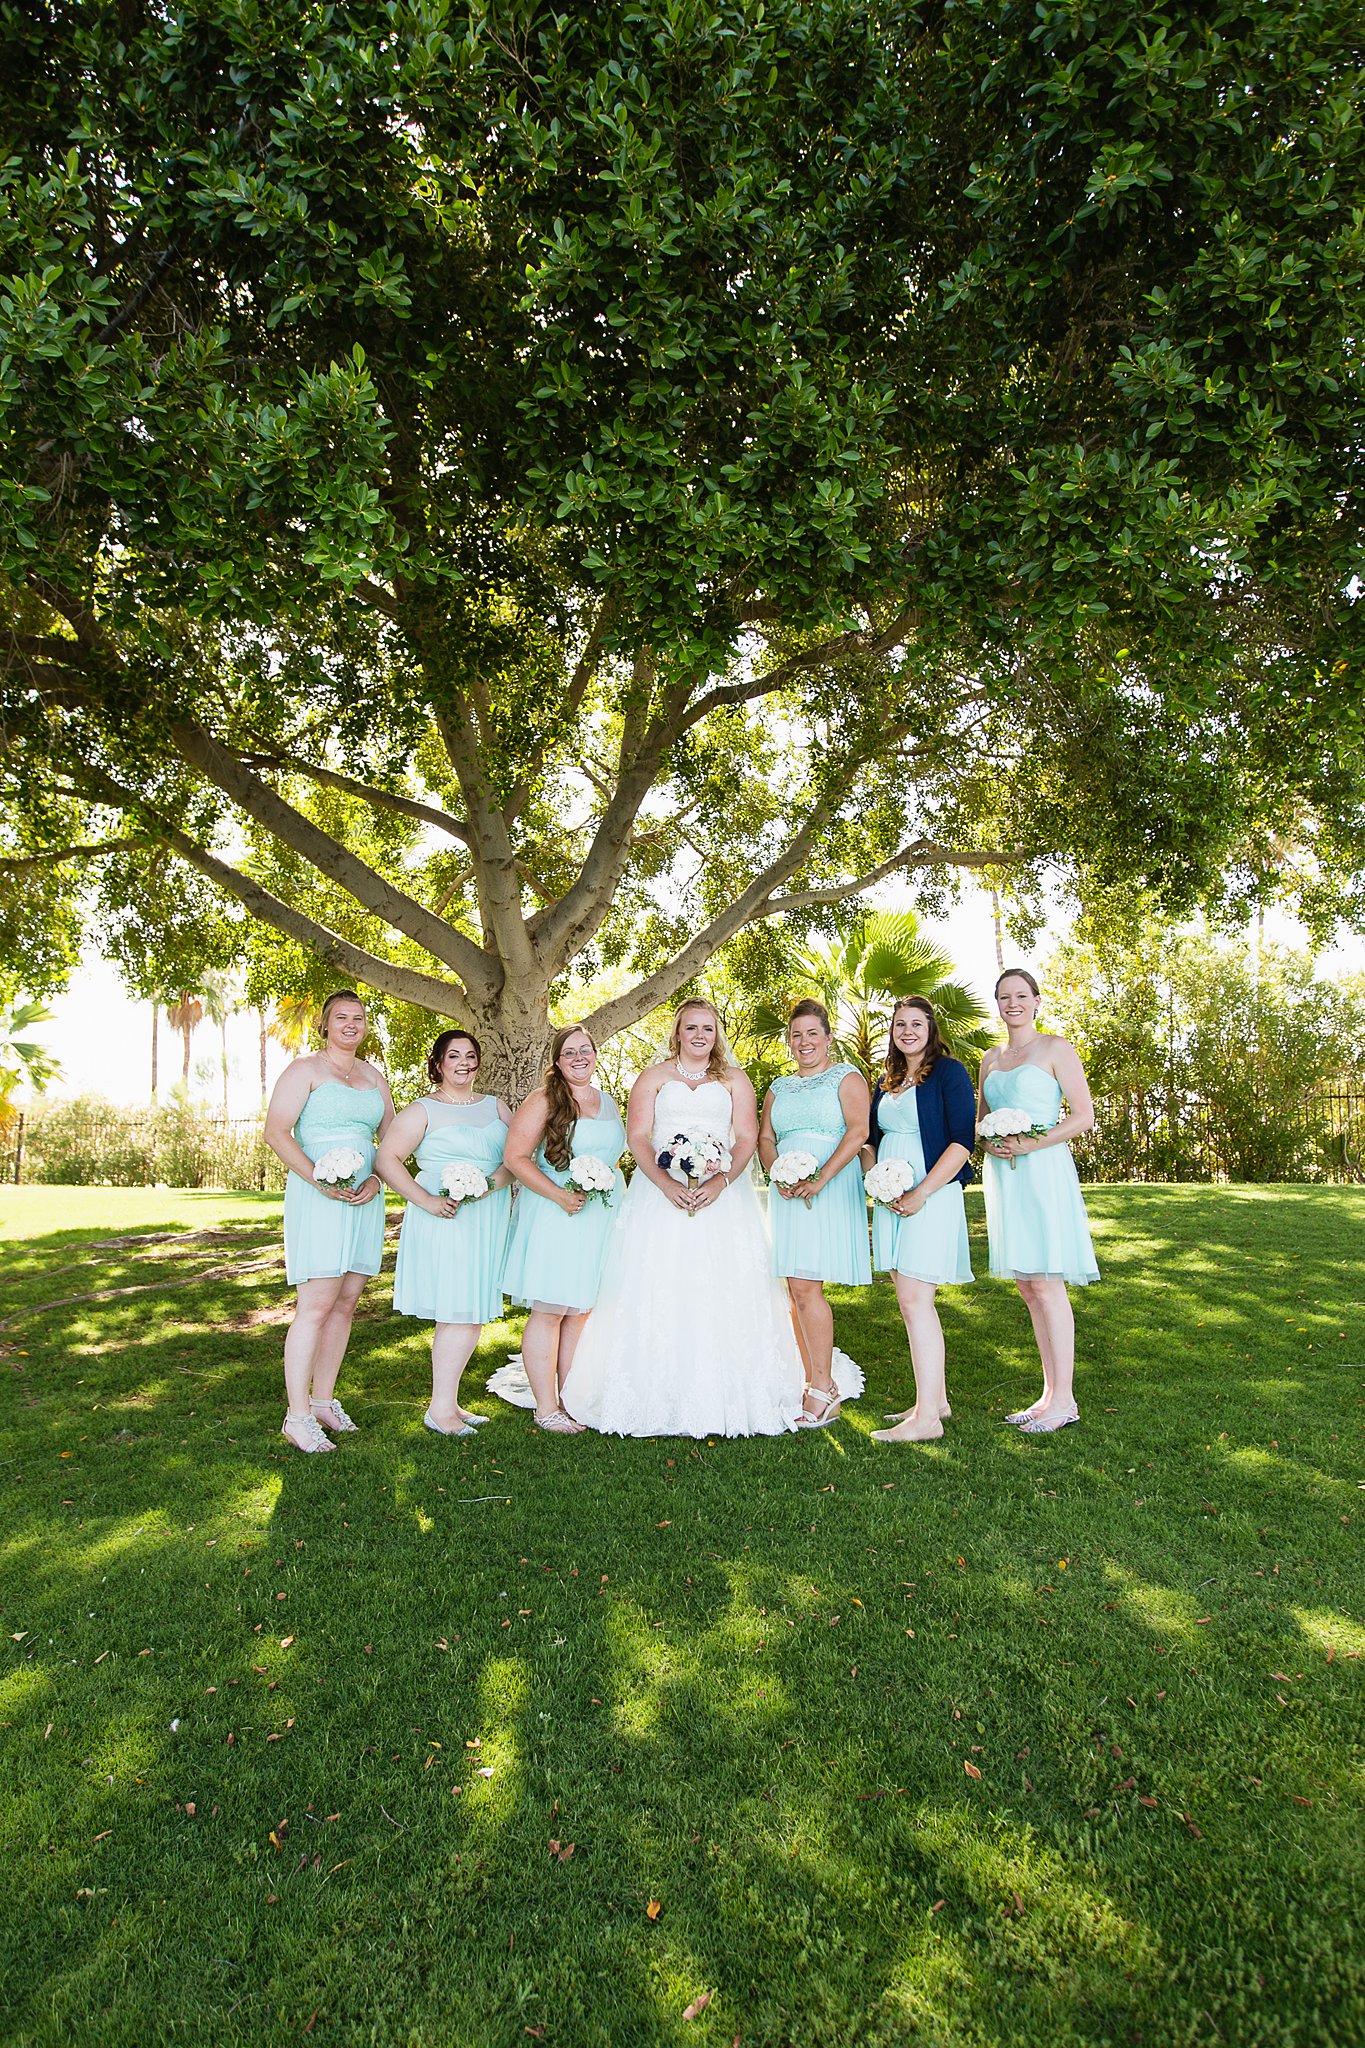 Bride and bridesmaids together at a Val Vista Lakes wedding by Arizona wedding photographer PMA Photography.